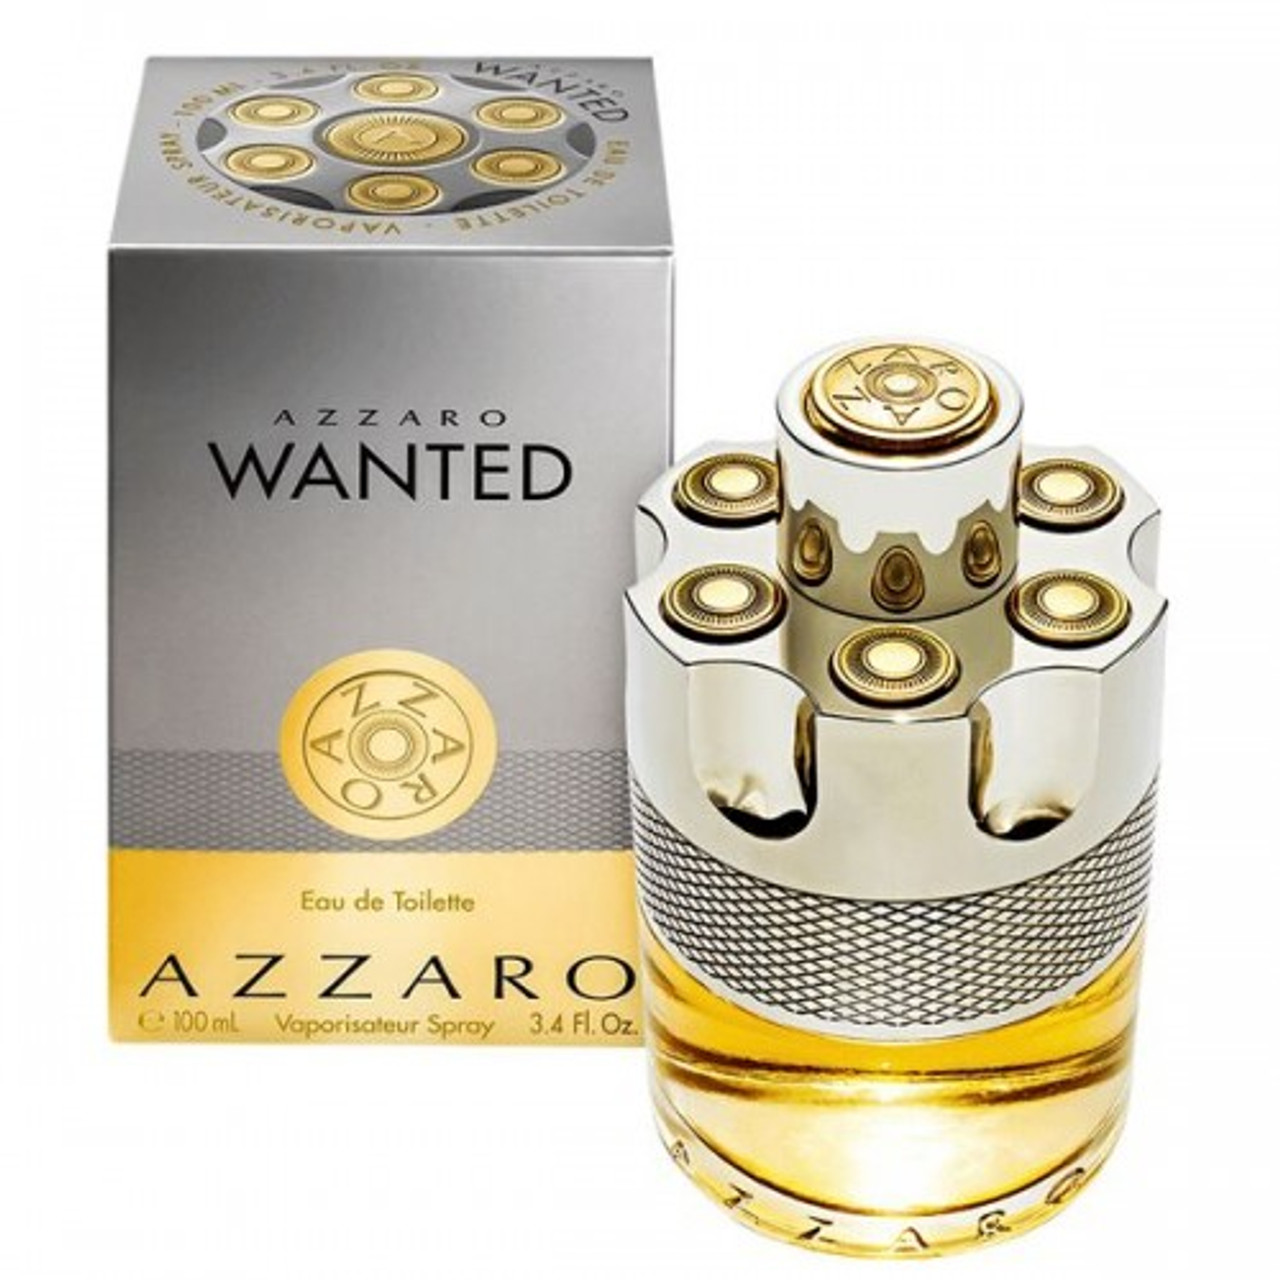 azzaro-perfume-masculino-wanted-eau-de-toilette-100ml2-600x600-500x500__64135.1496432671.jpg